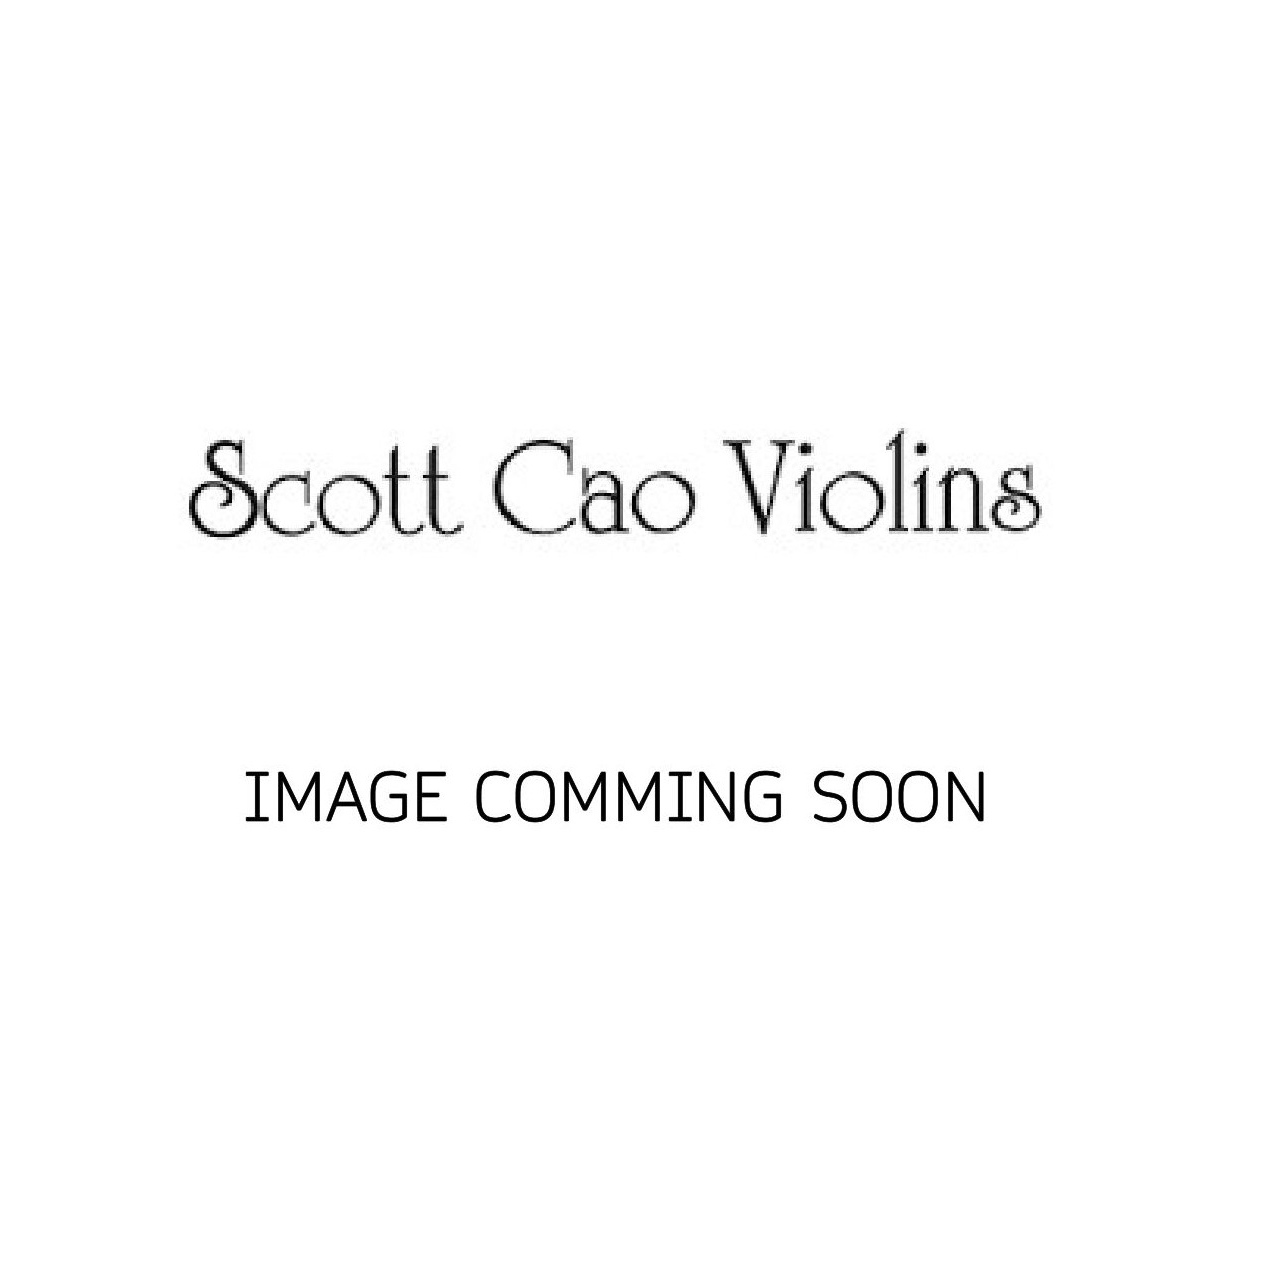 Scott Cao Viola 33,0 cm EU-komplett